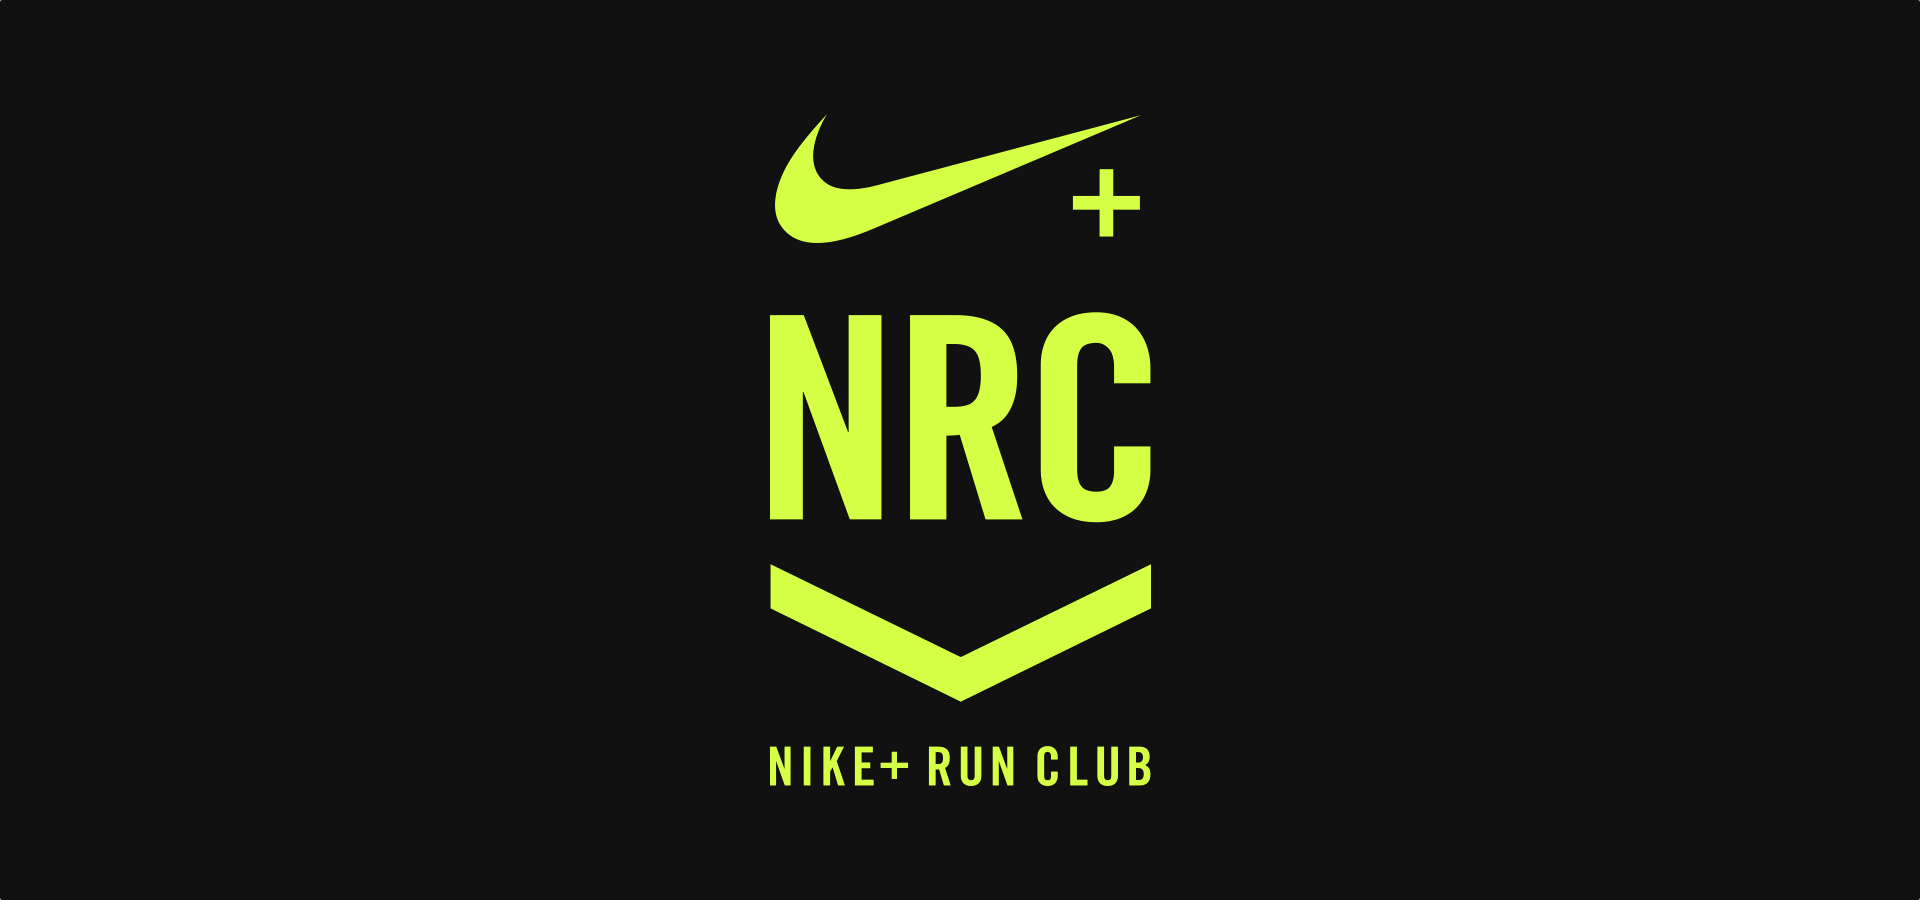 nike run club website nike run club